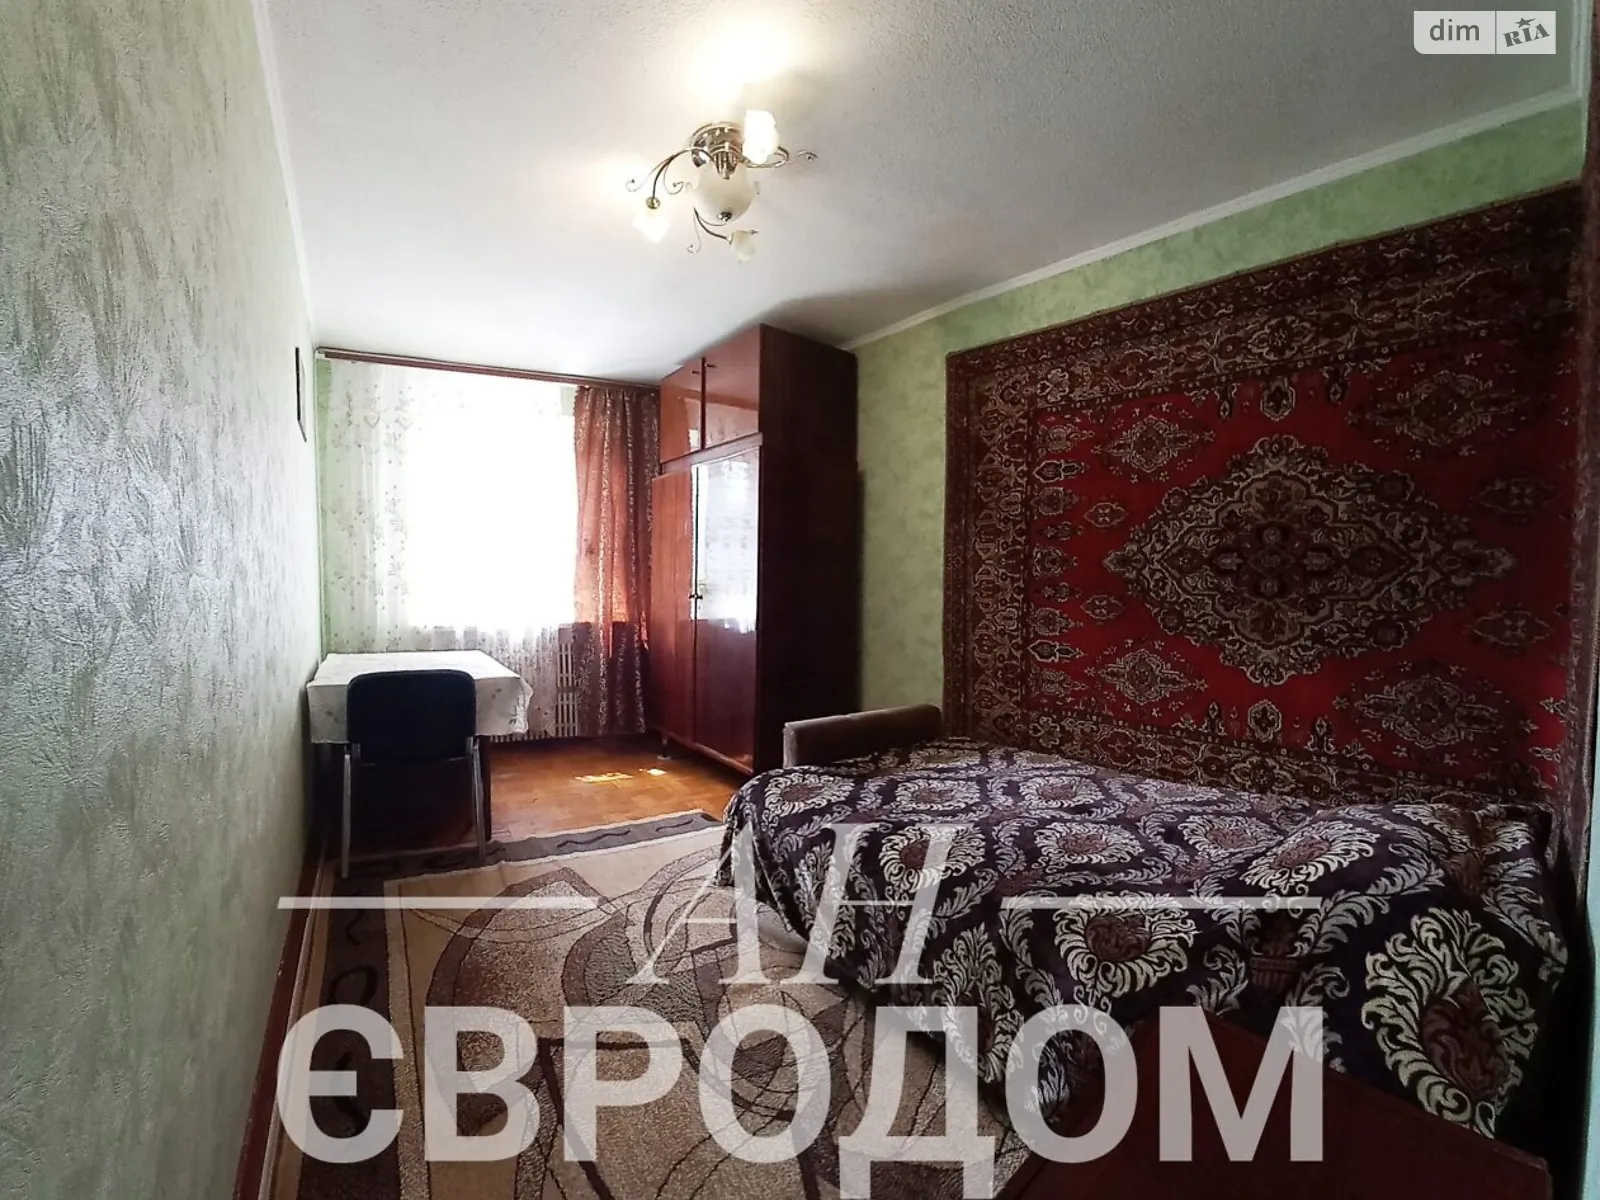 Сдается в аренду комната 58 кв. м в Харькове - фото 3